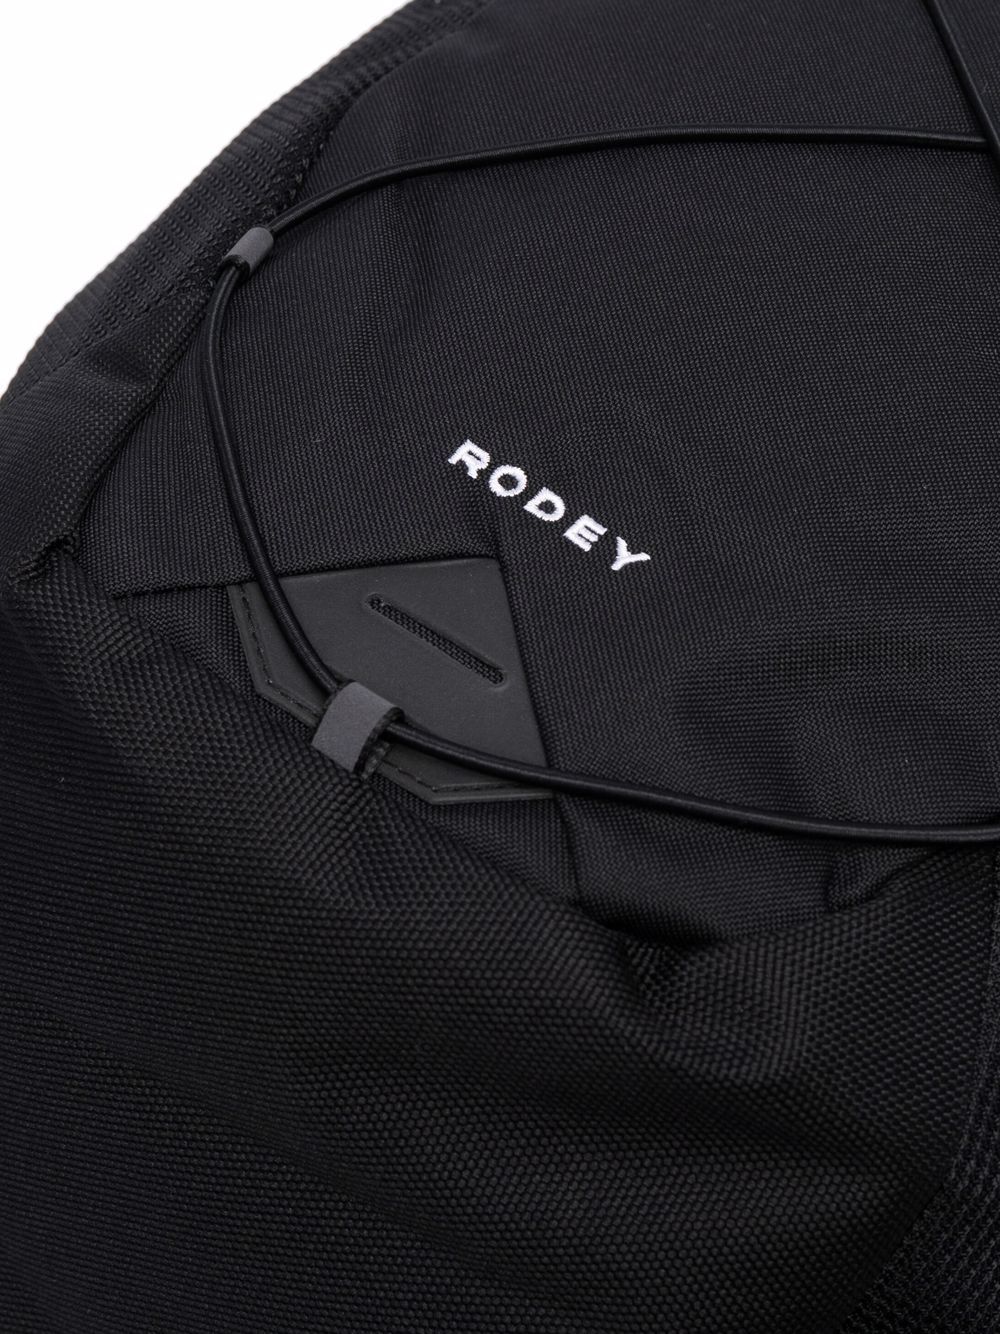 фото The north face рюкзак на молнии с вышитым логотипом